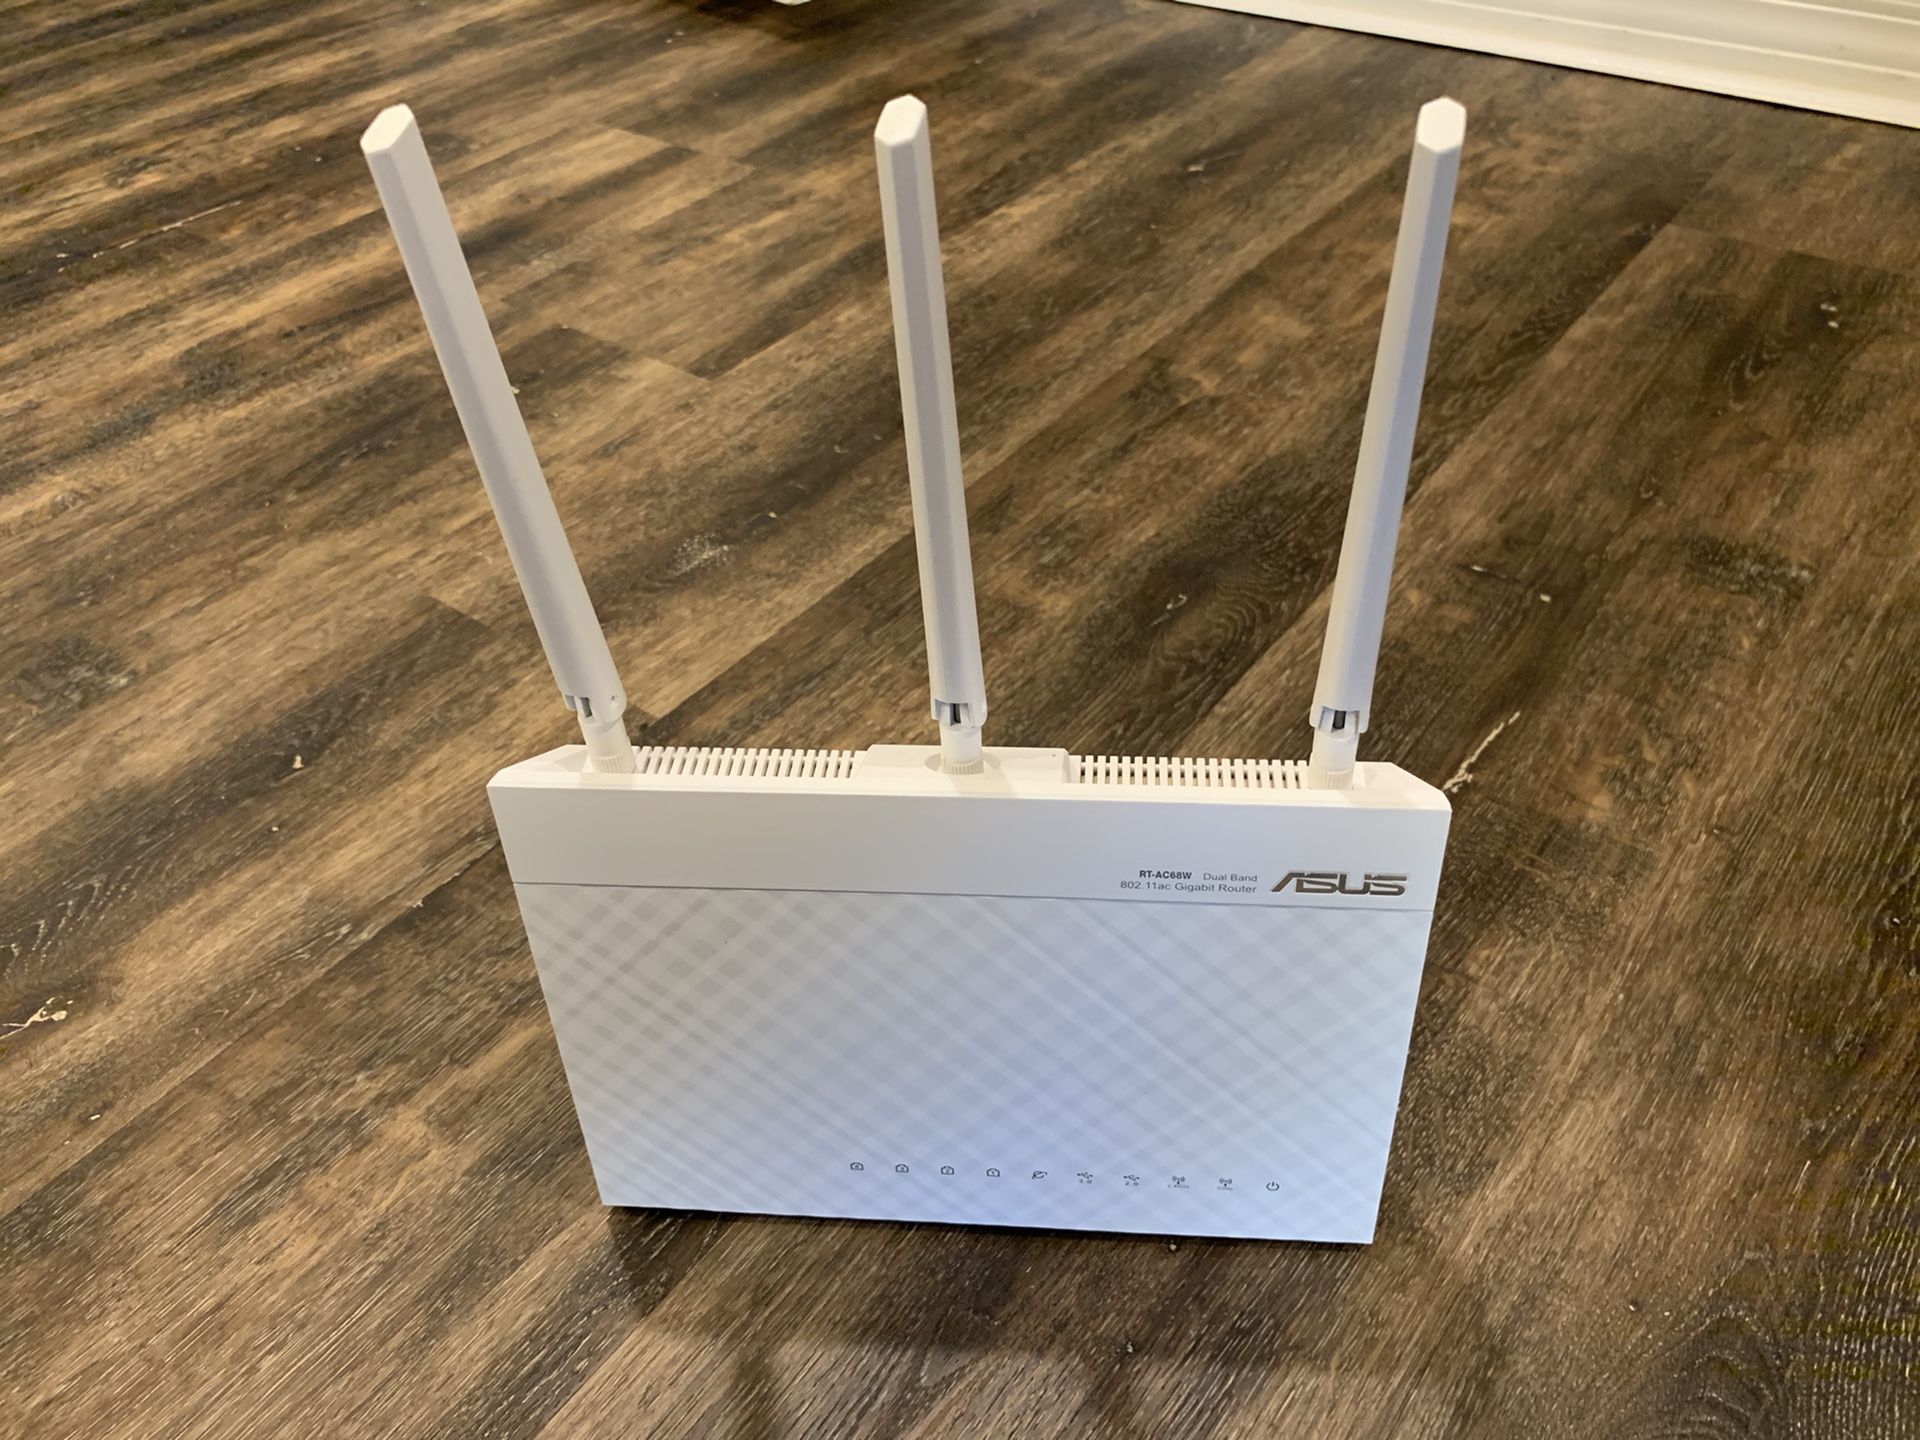 ASUS Wi-Fi 802.11ac Gigabit Router (RT-AC68W)